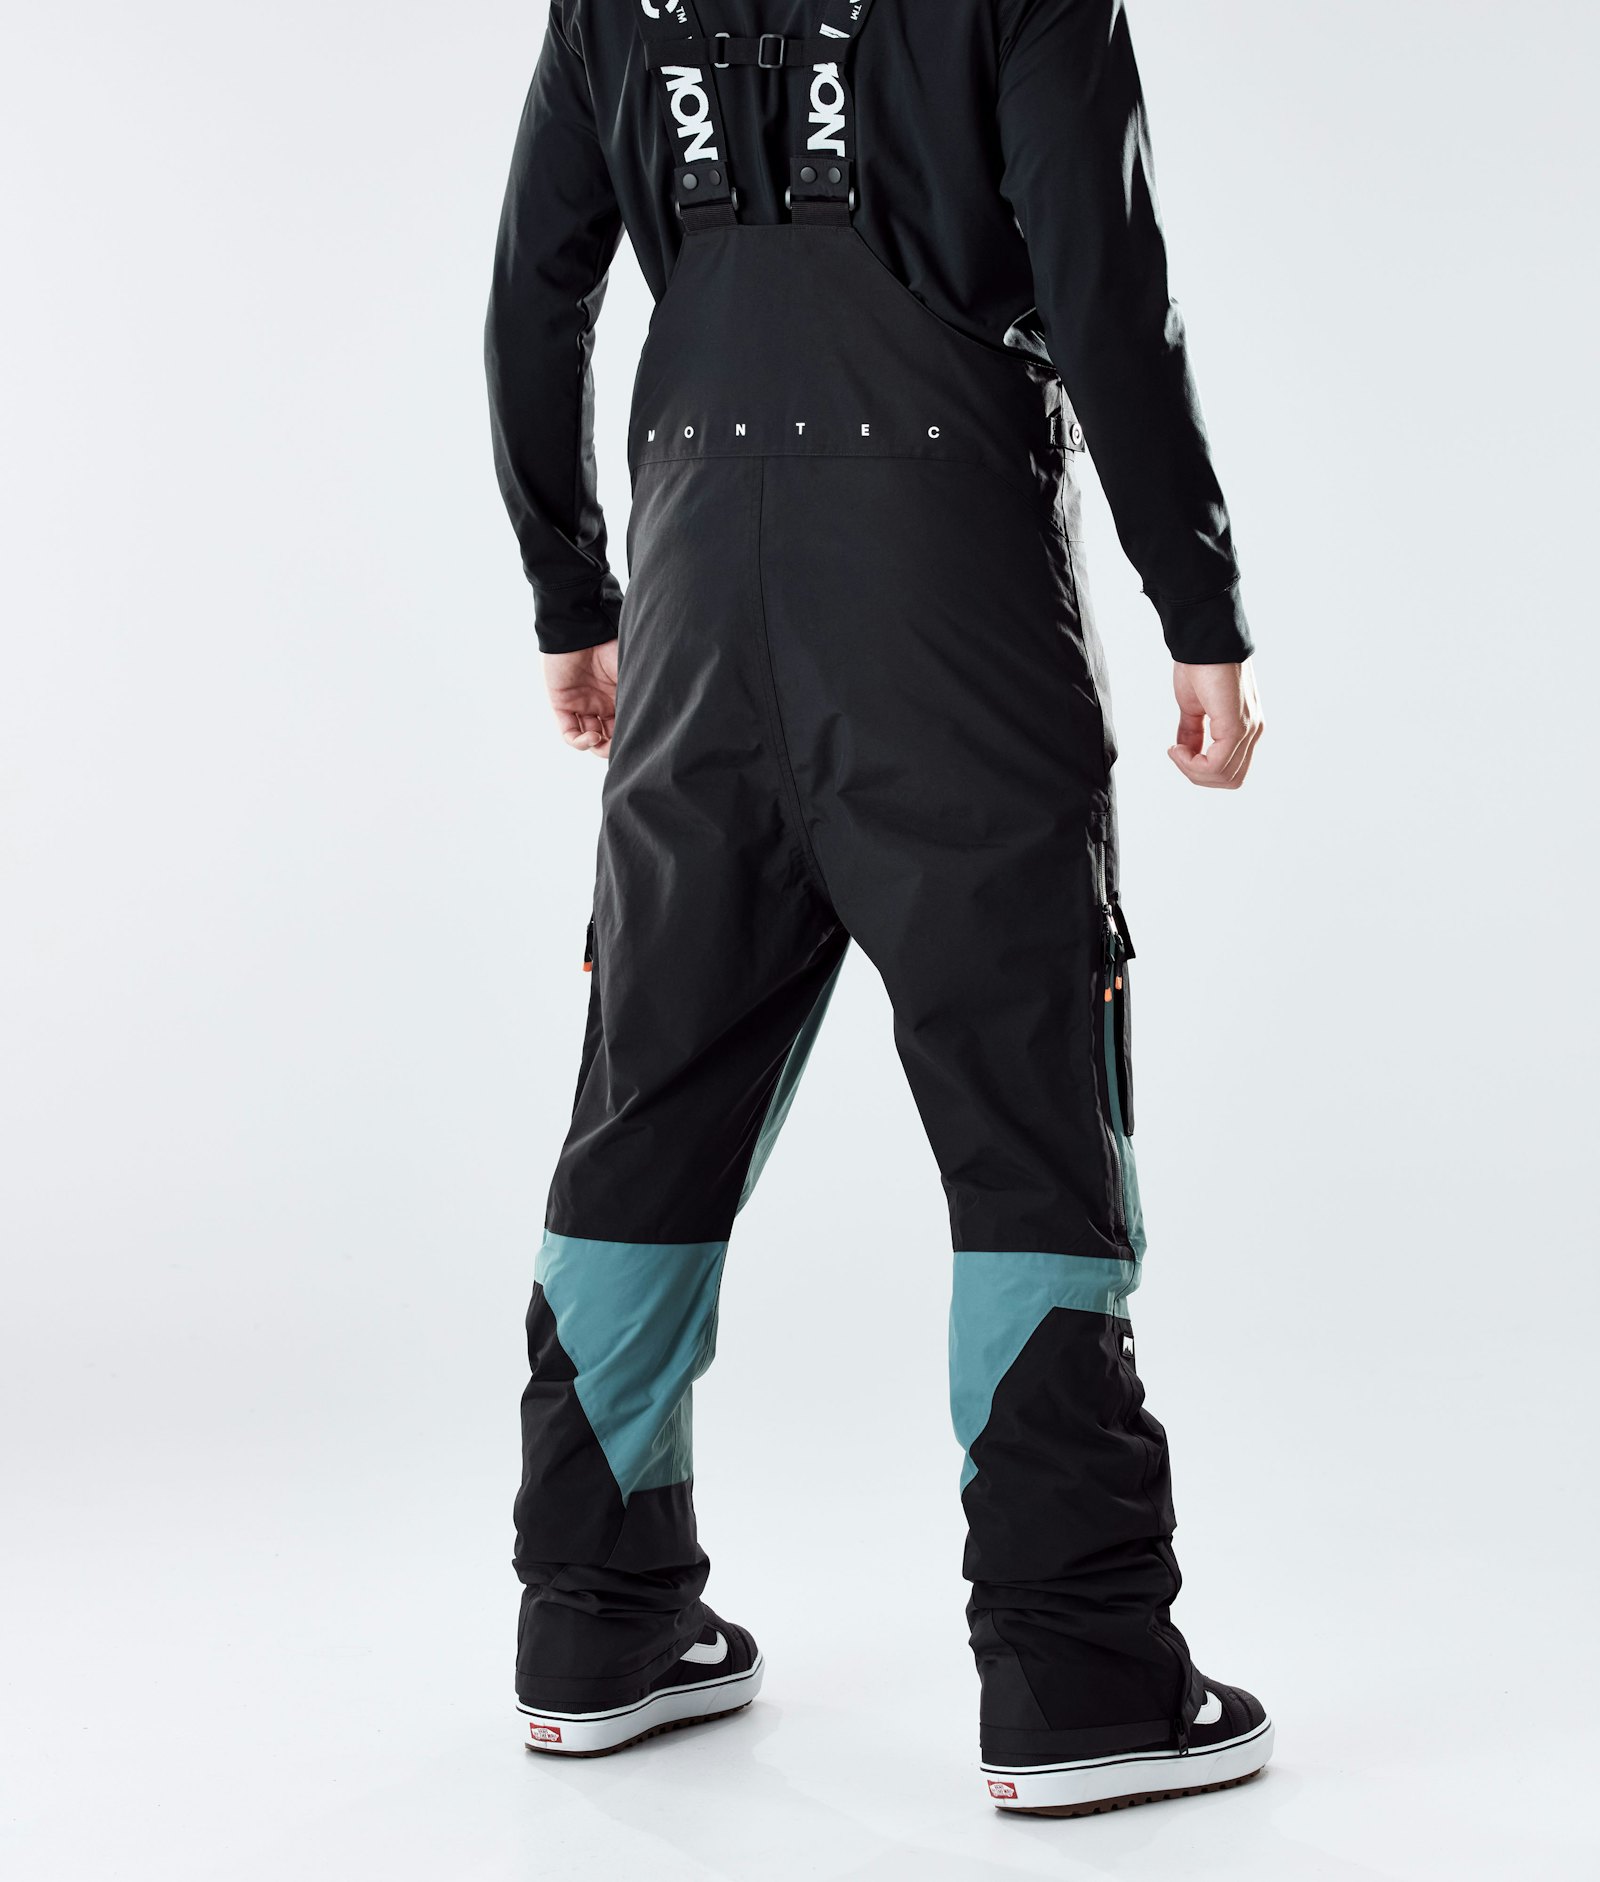 Fawk 2020 Snowboardhose Herren Black/Atlantic